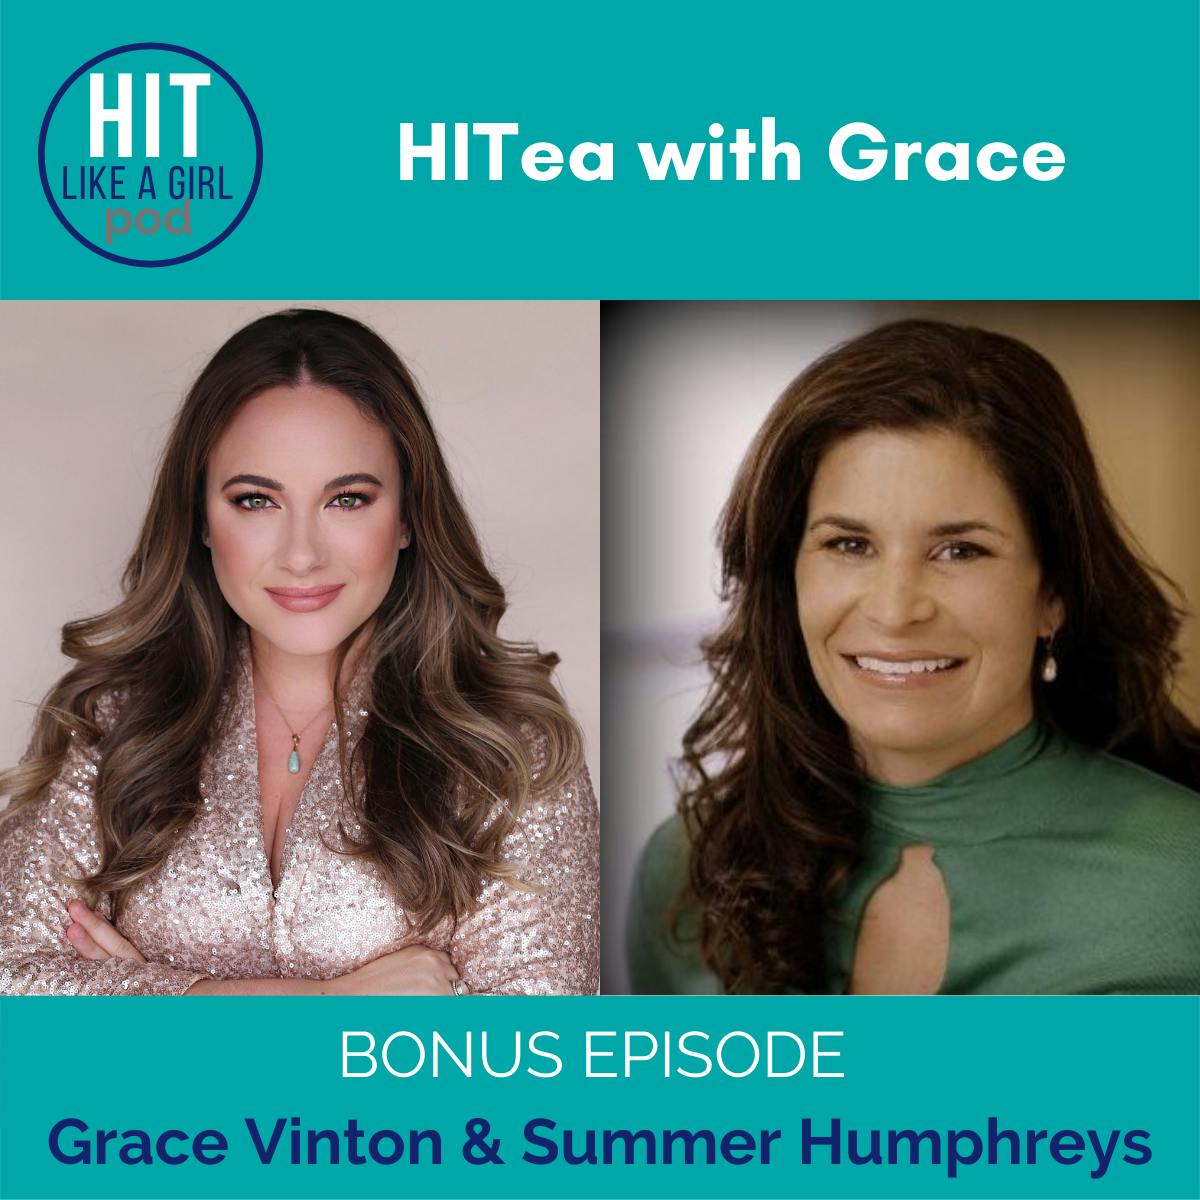 HITea with Grace: Grace Vinton interviews Summer Humphreys